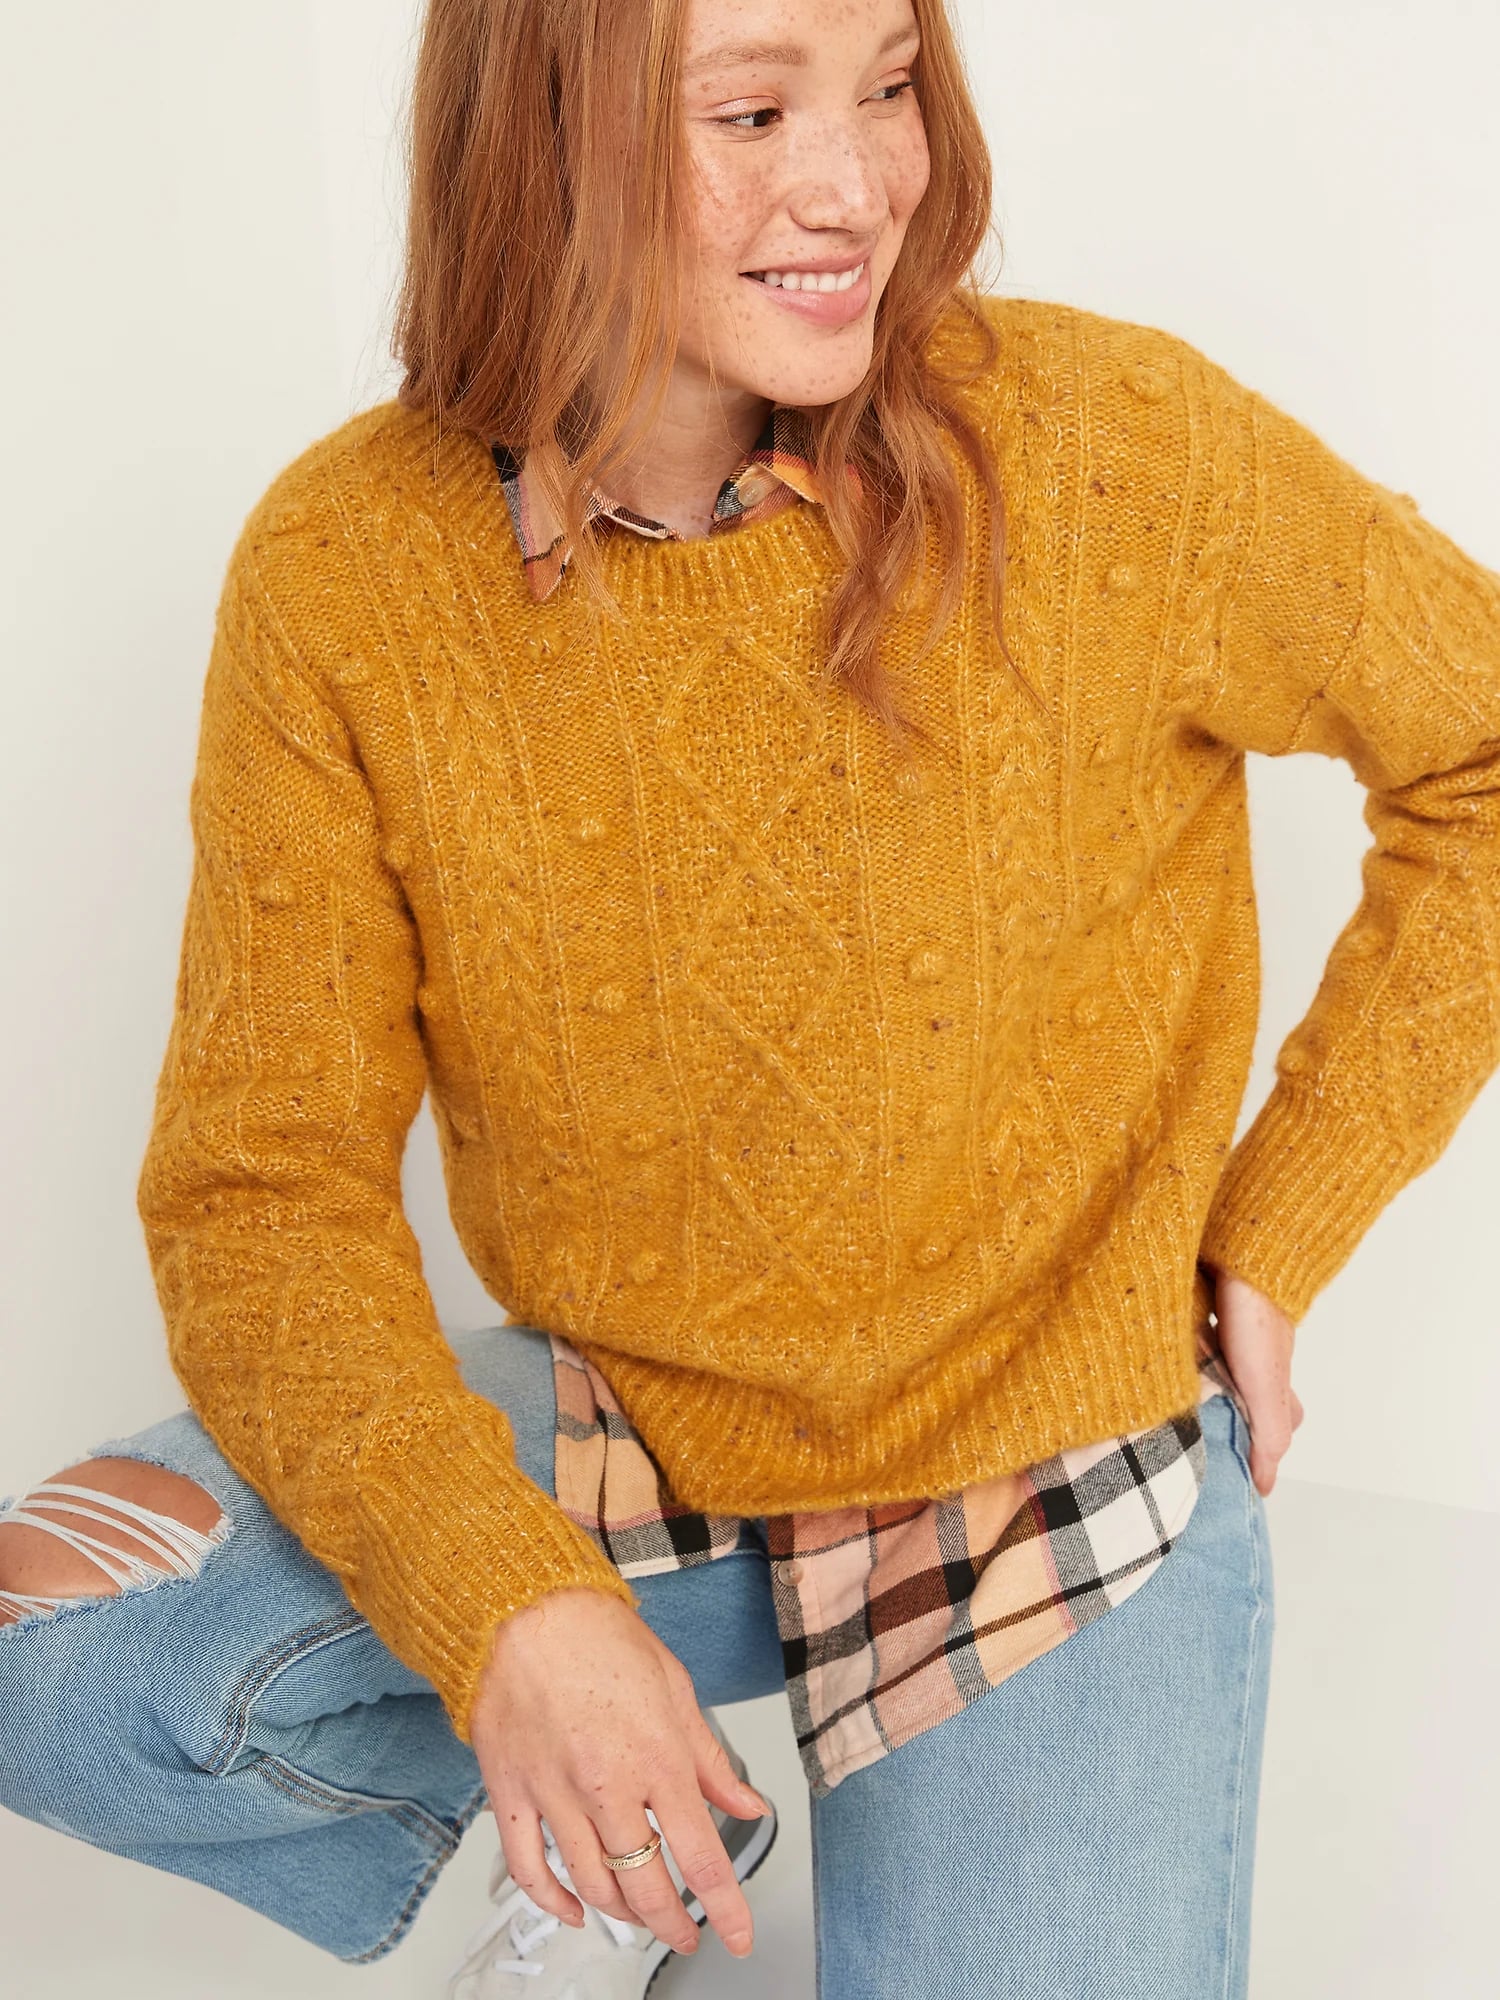 14 Ways to Style a Sweater Vest | POPSUGAR Fashion